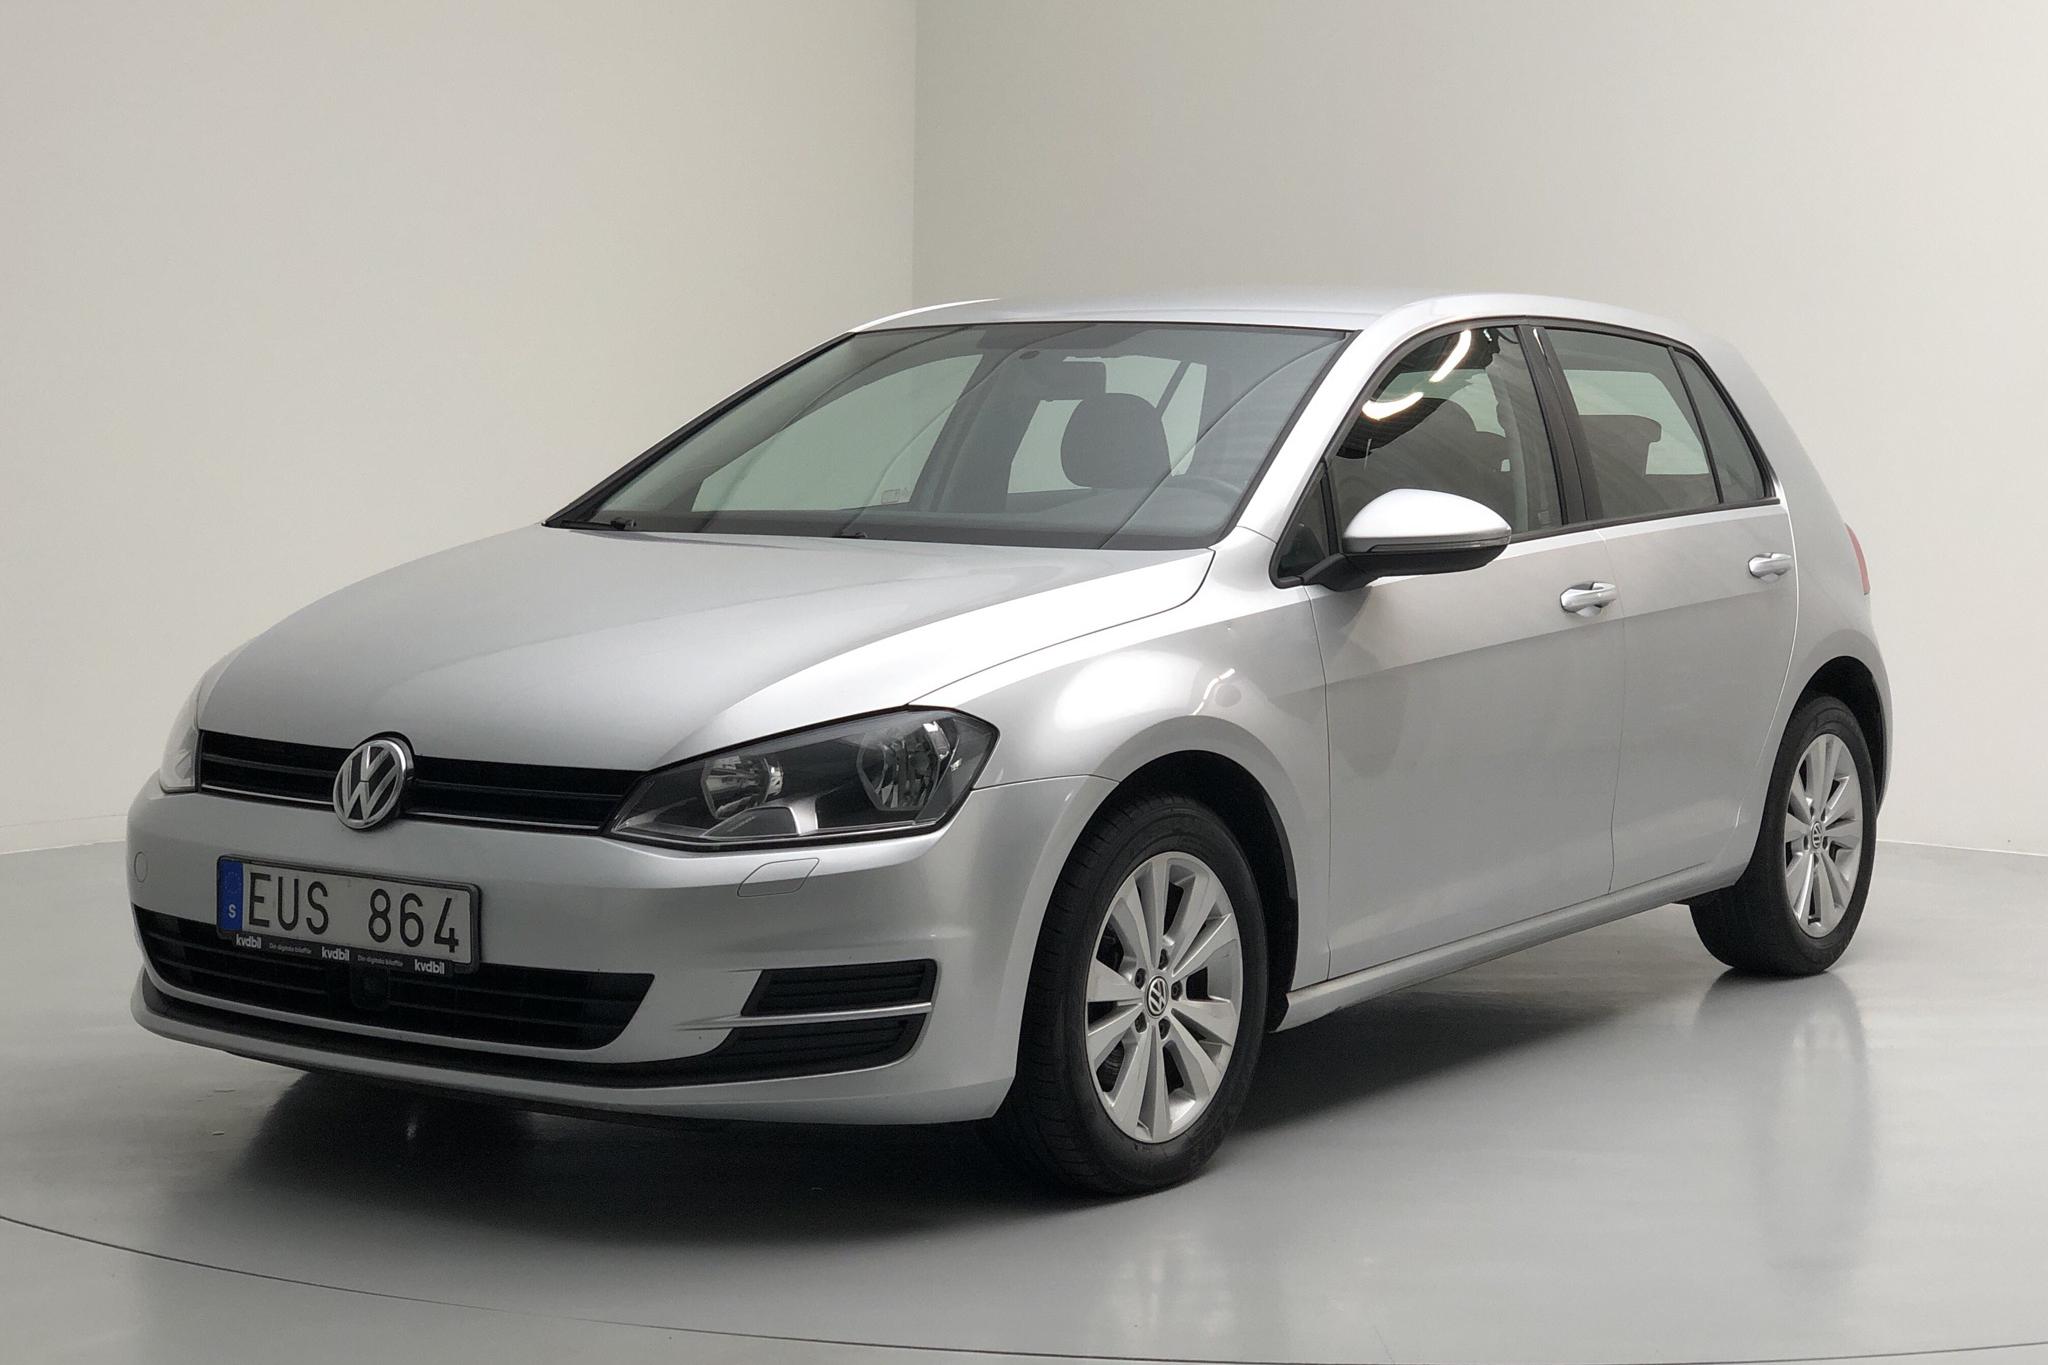 VW Golf VII 1.6 TDI BlueMotion Technology 5dr (105hk) - 131 200 km - Manual - silver - 2013